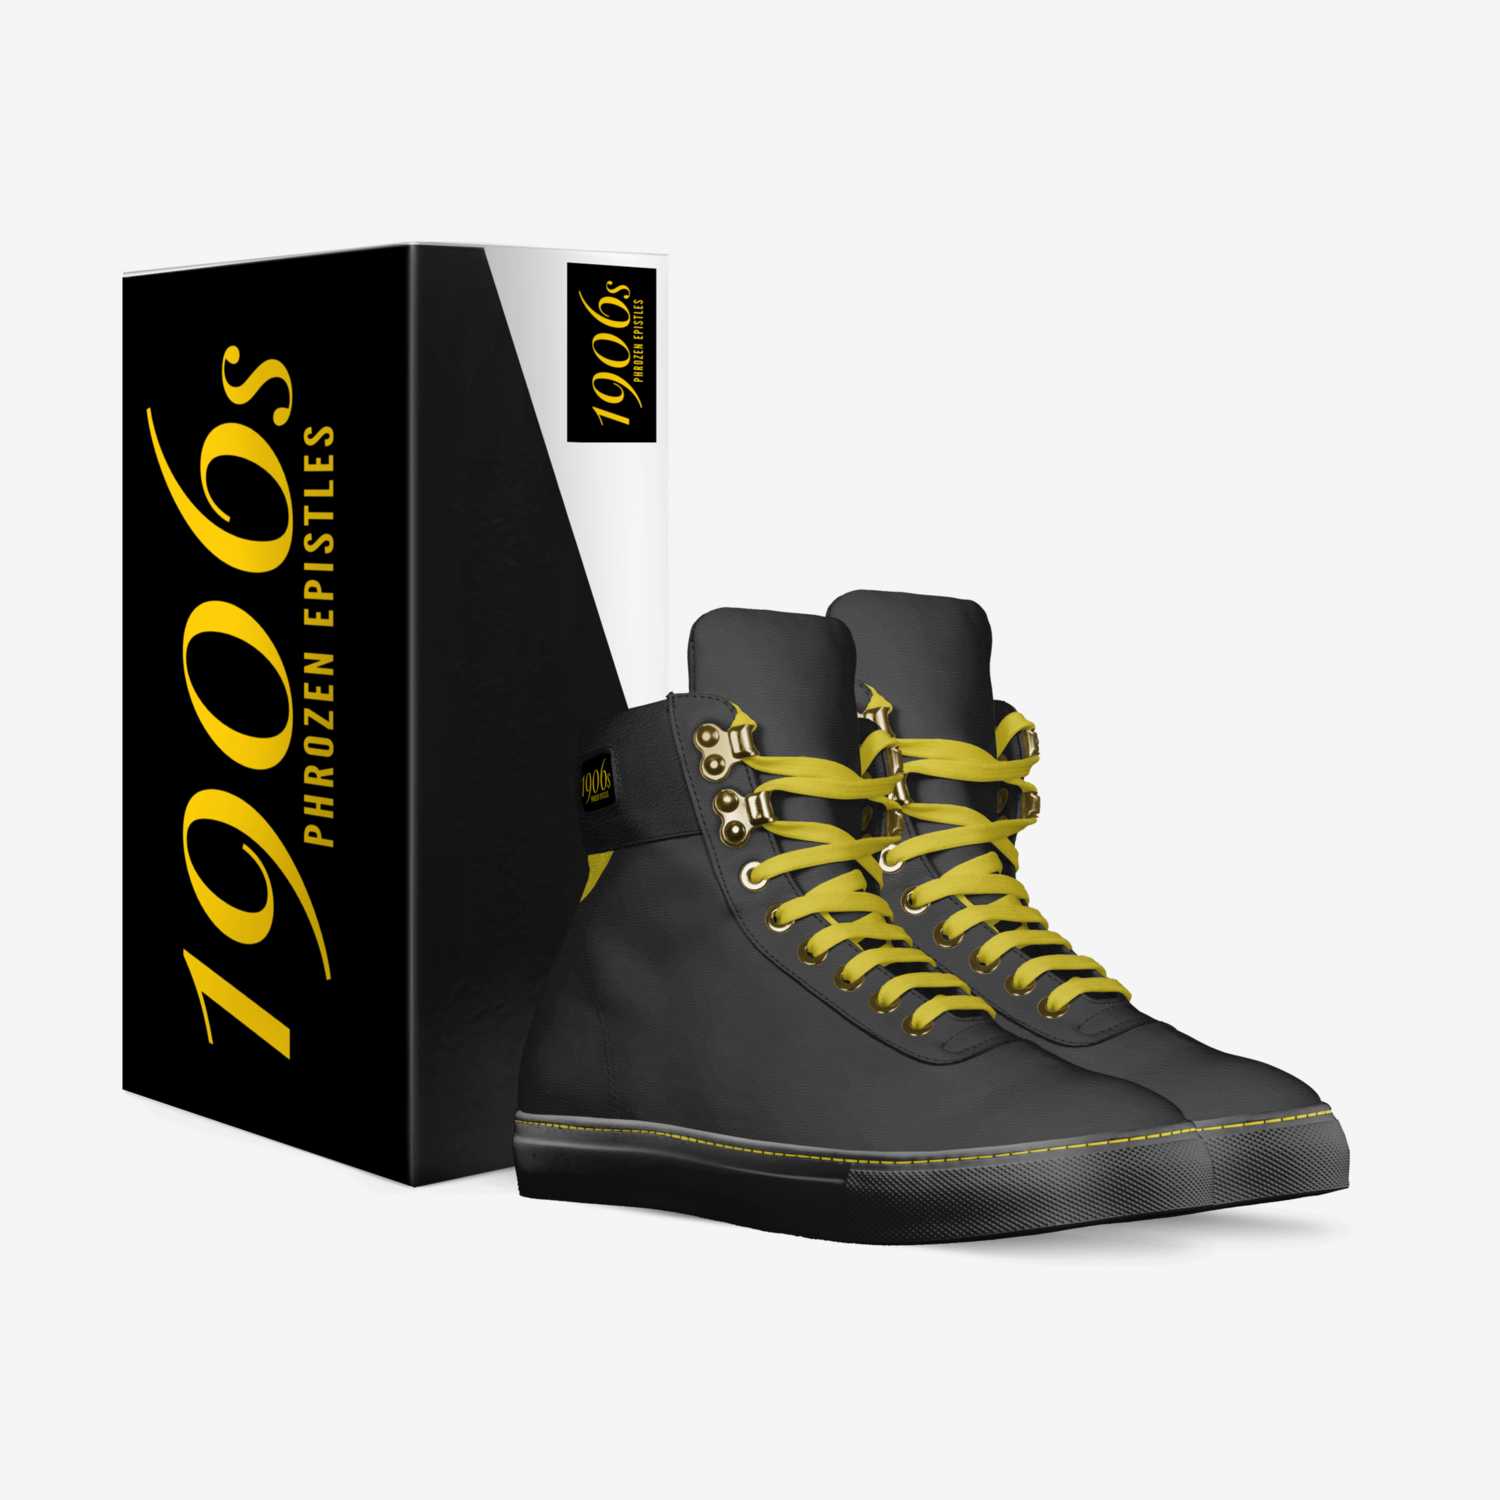 Phrozen Epistles custom made in Italy shoes by Urbanwallstreet Earl | Box view